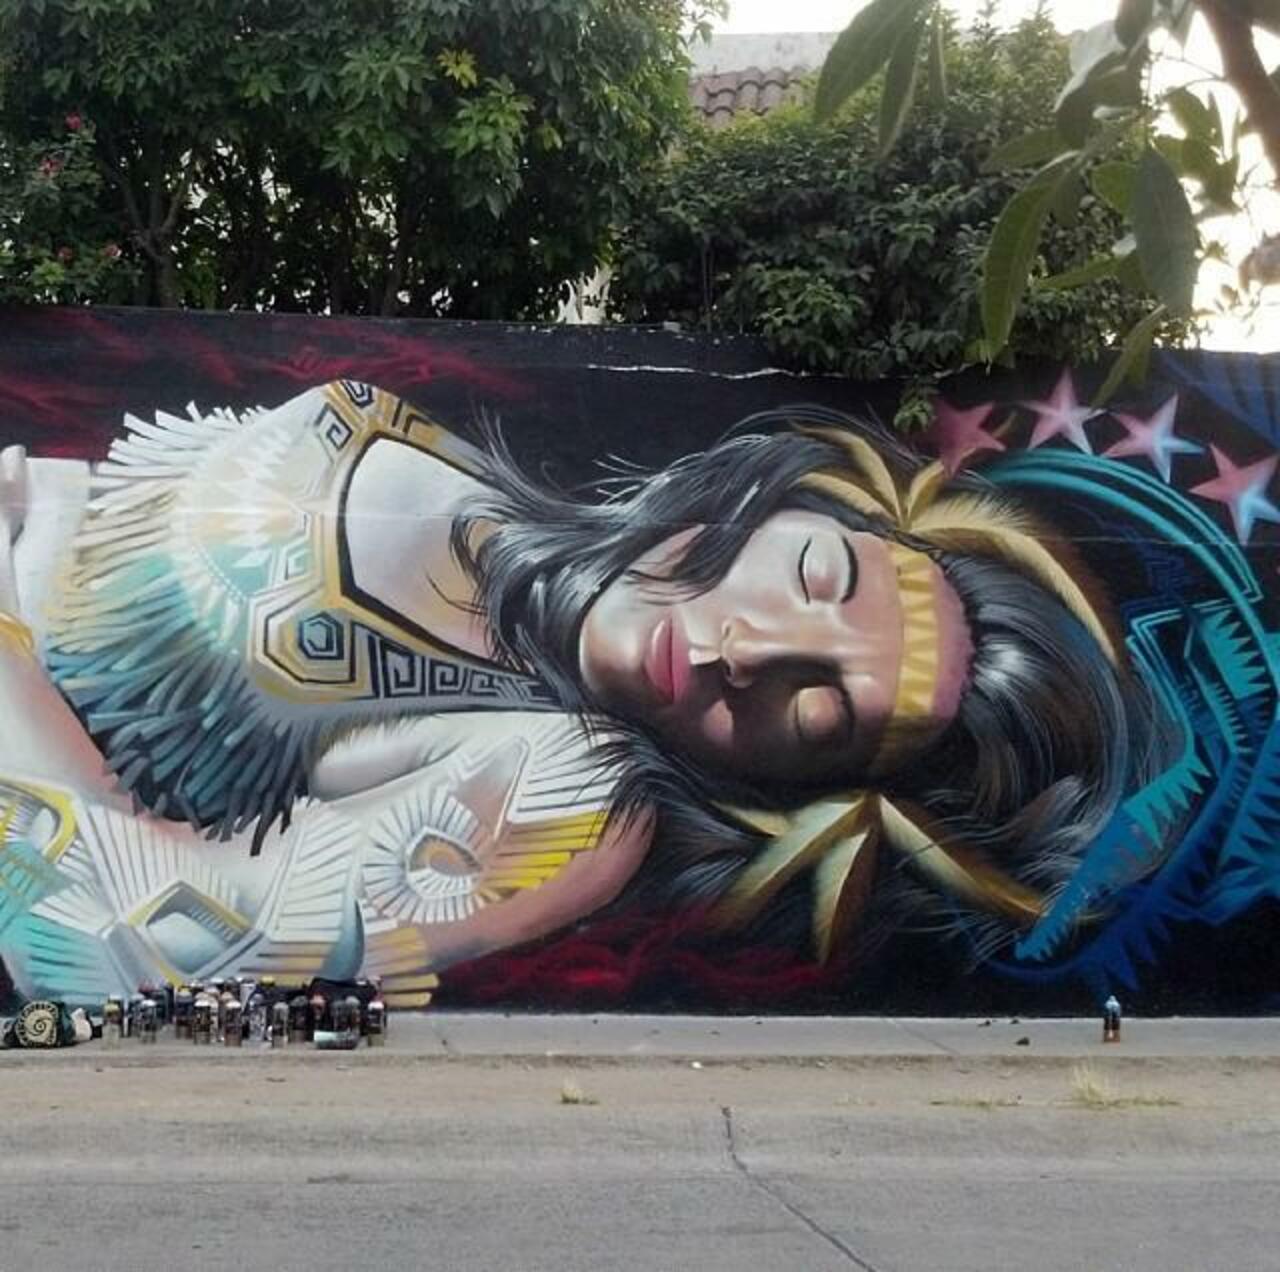 “@GoogleStreetArt: New Street Art by Kauak Trasformador in Mexico

#art #mural #streetart http://t.co/4N1p0LcPai”